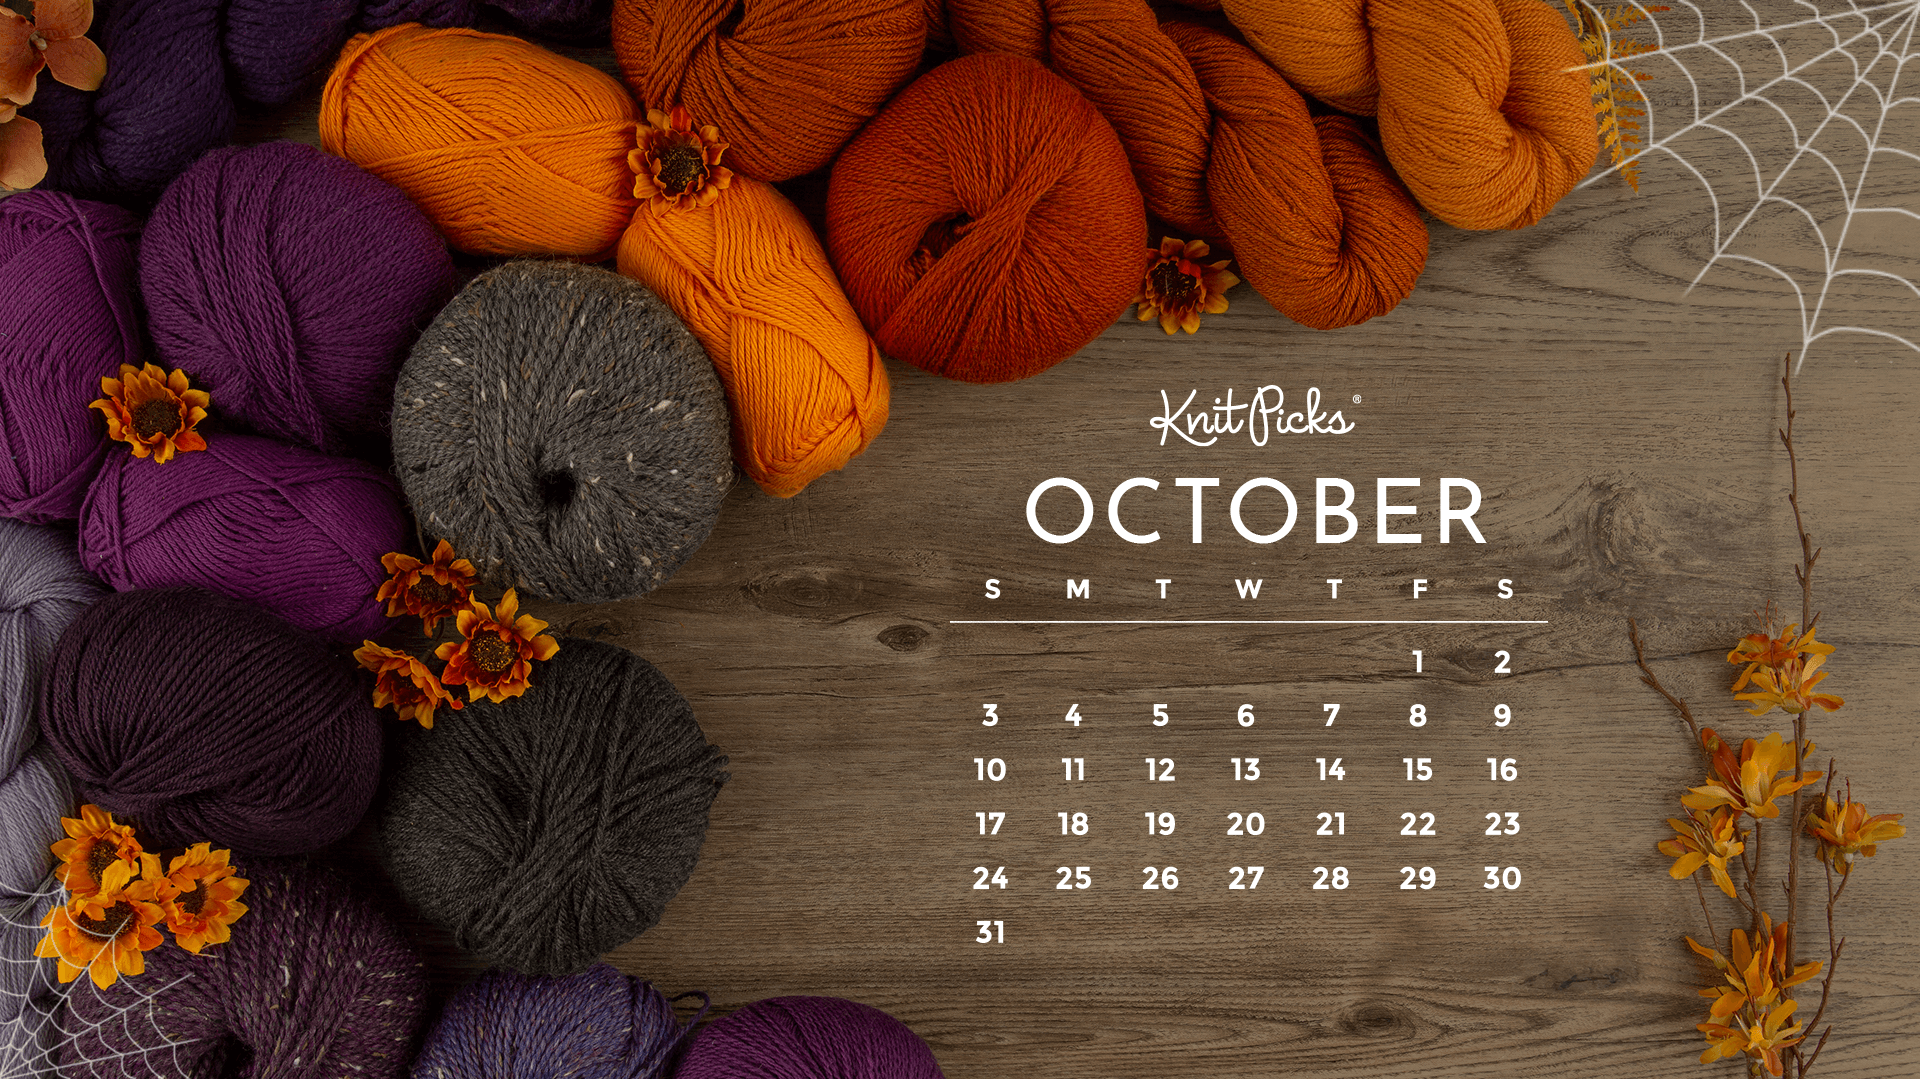 Free Downloadable October 21 Calendar Knitpicks Staff Knitting Blog